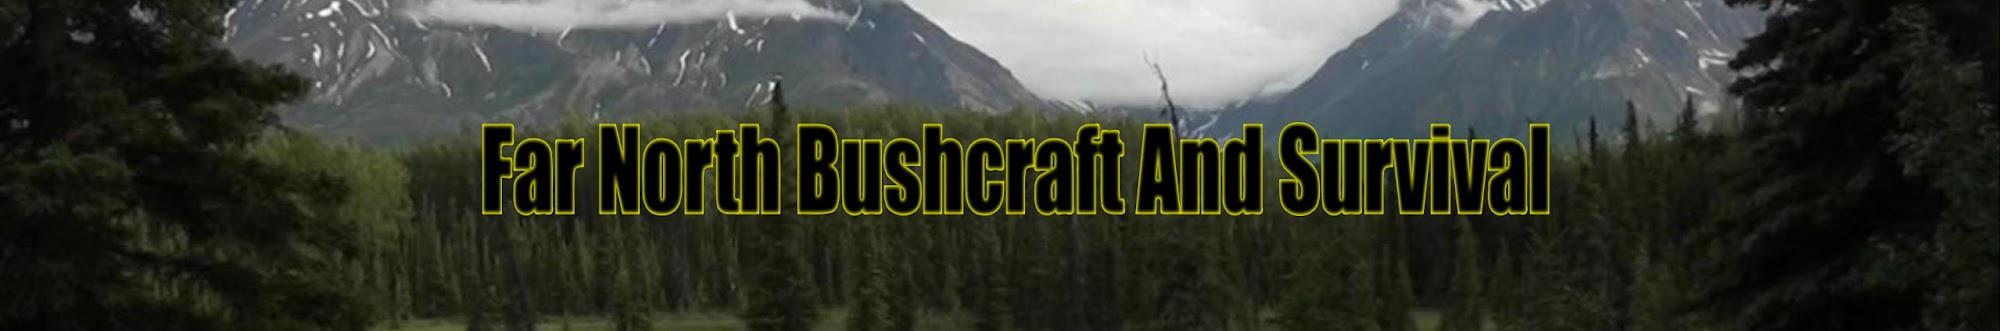 Far North Bushcraft And Survival